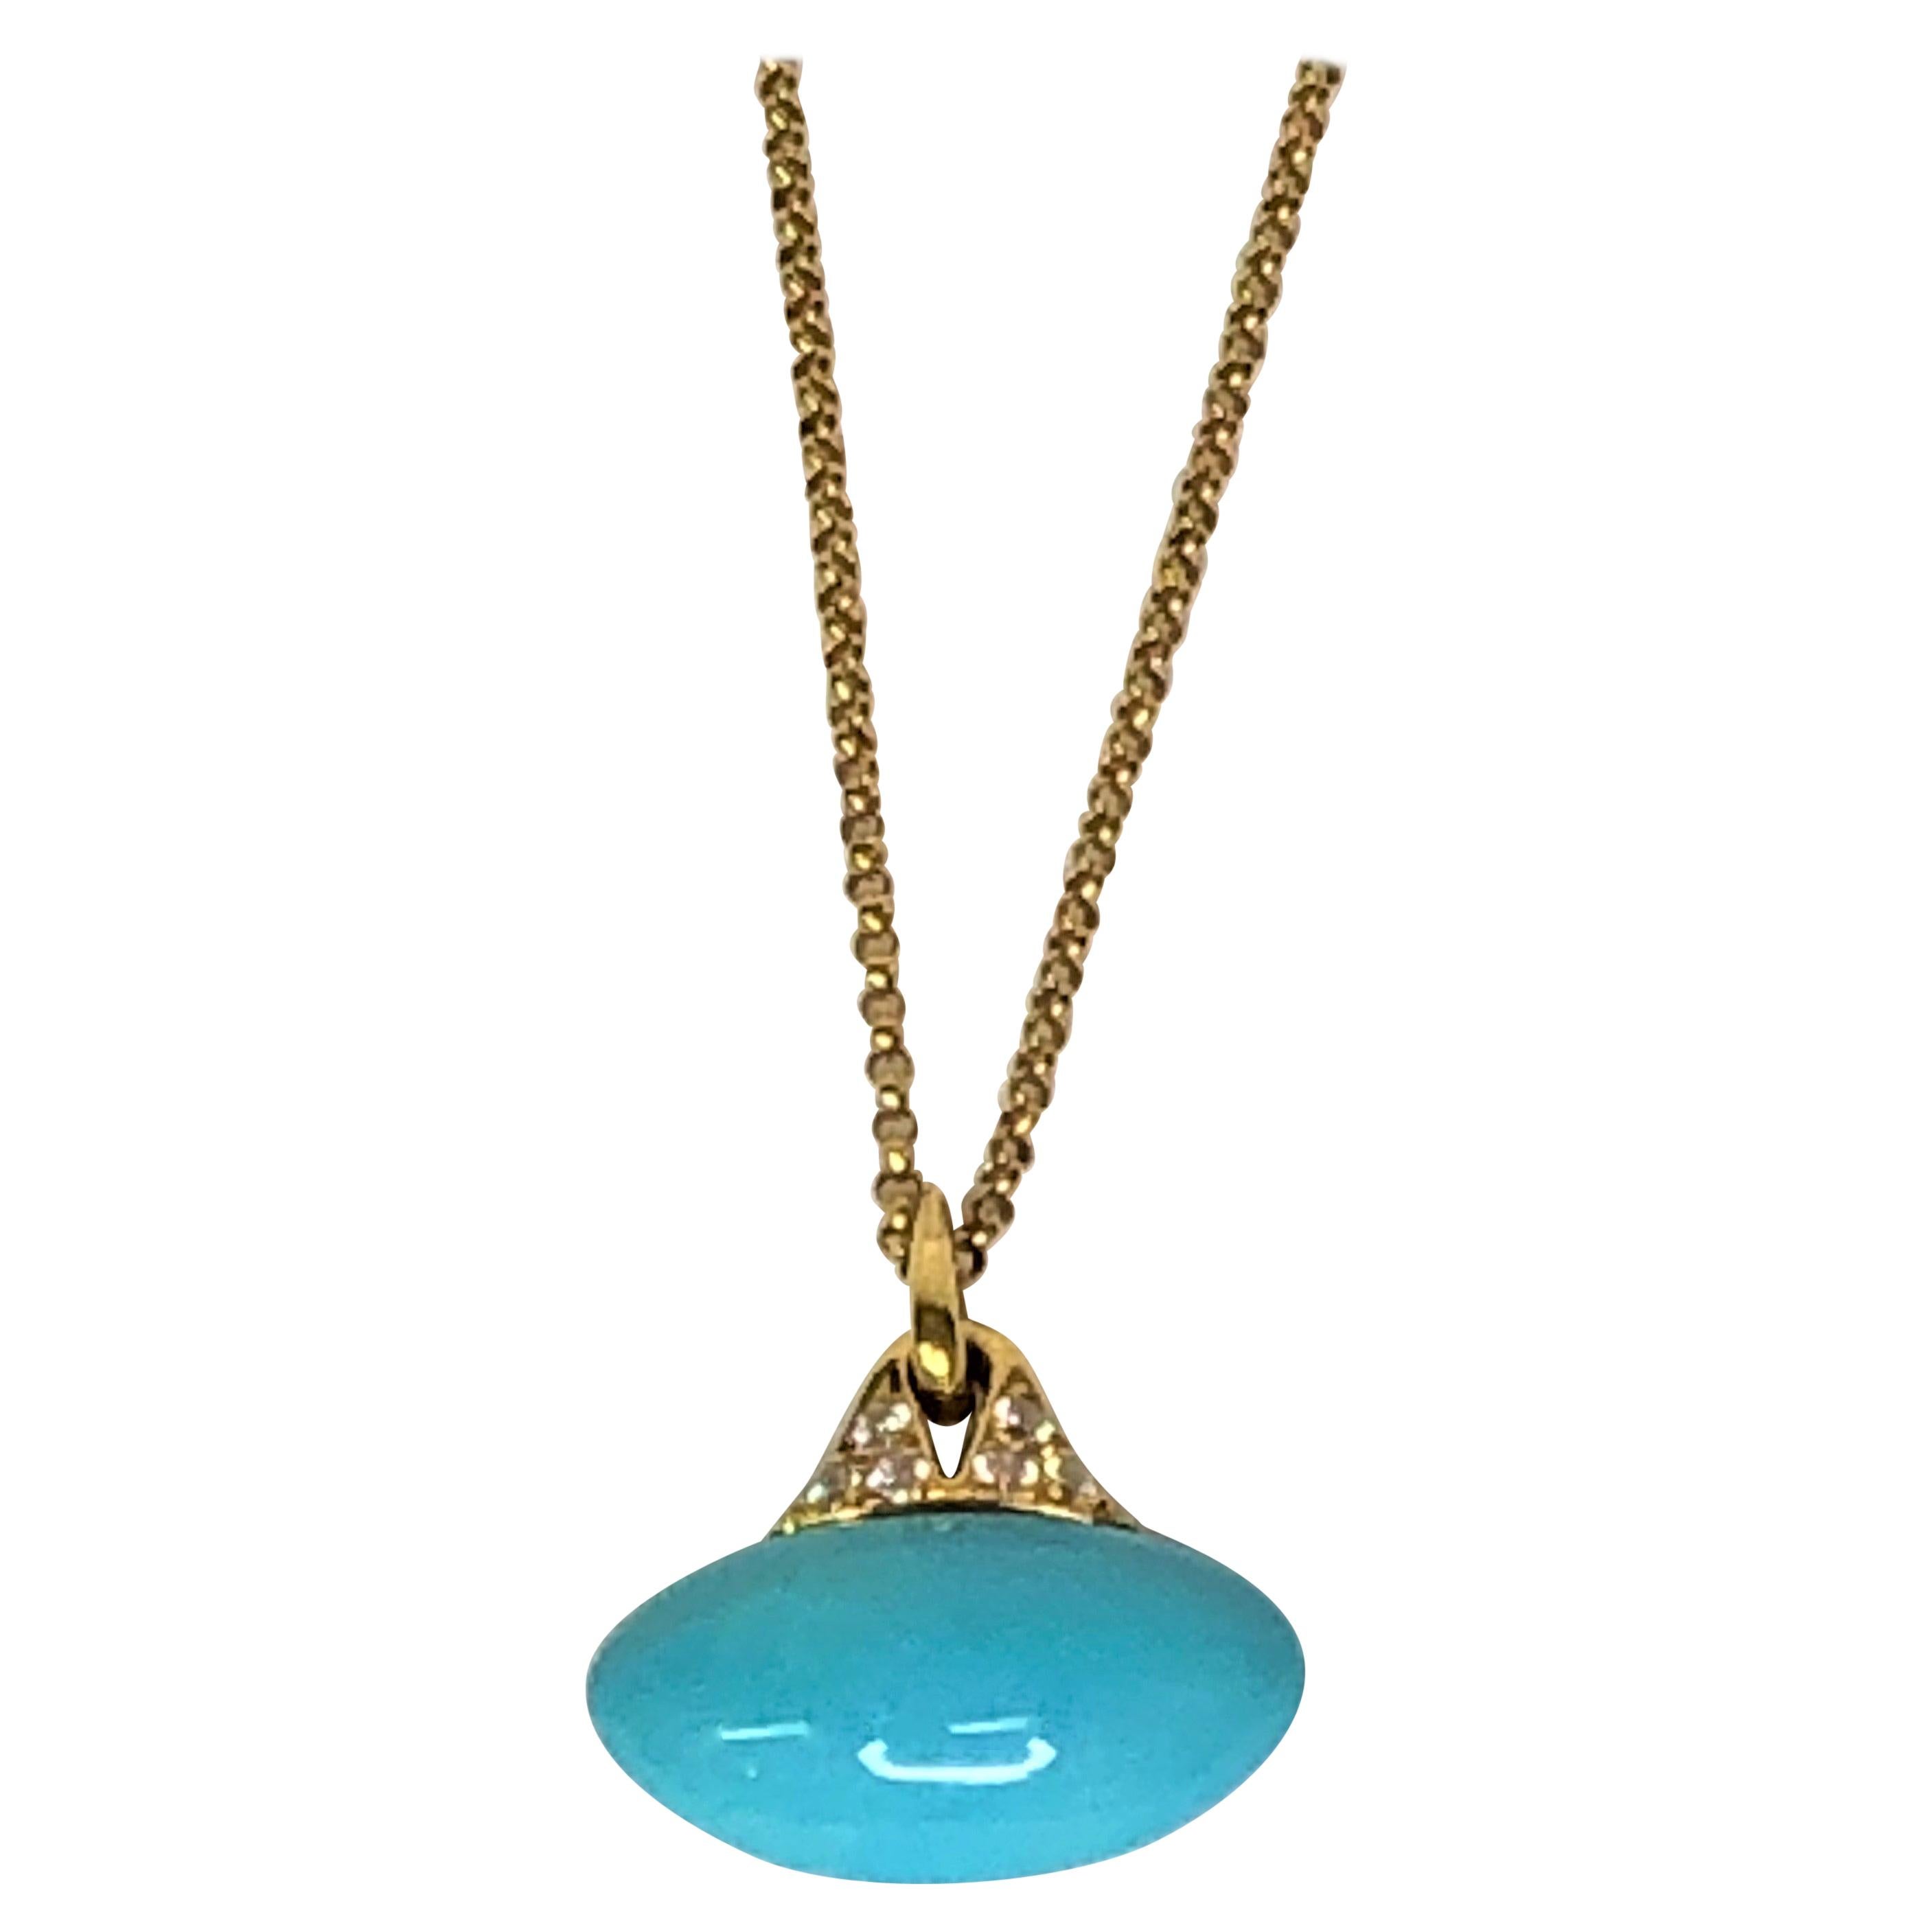 Michael Bondanza 18KY Turquoise Diamond Necklace